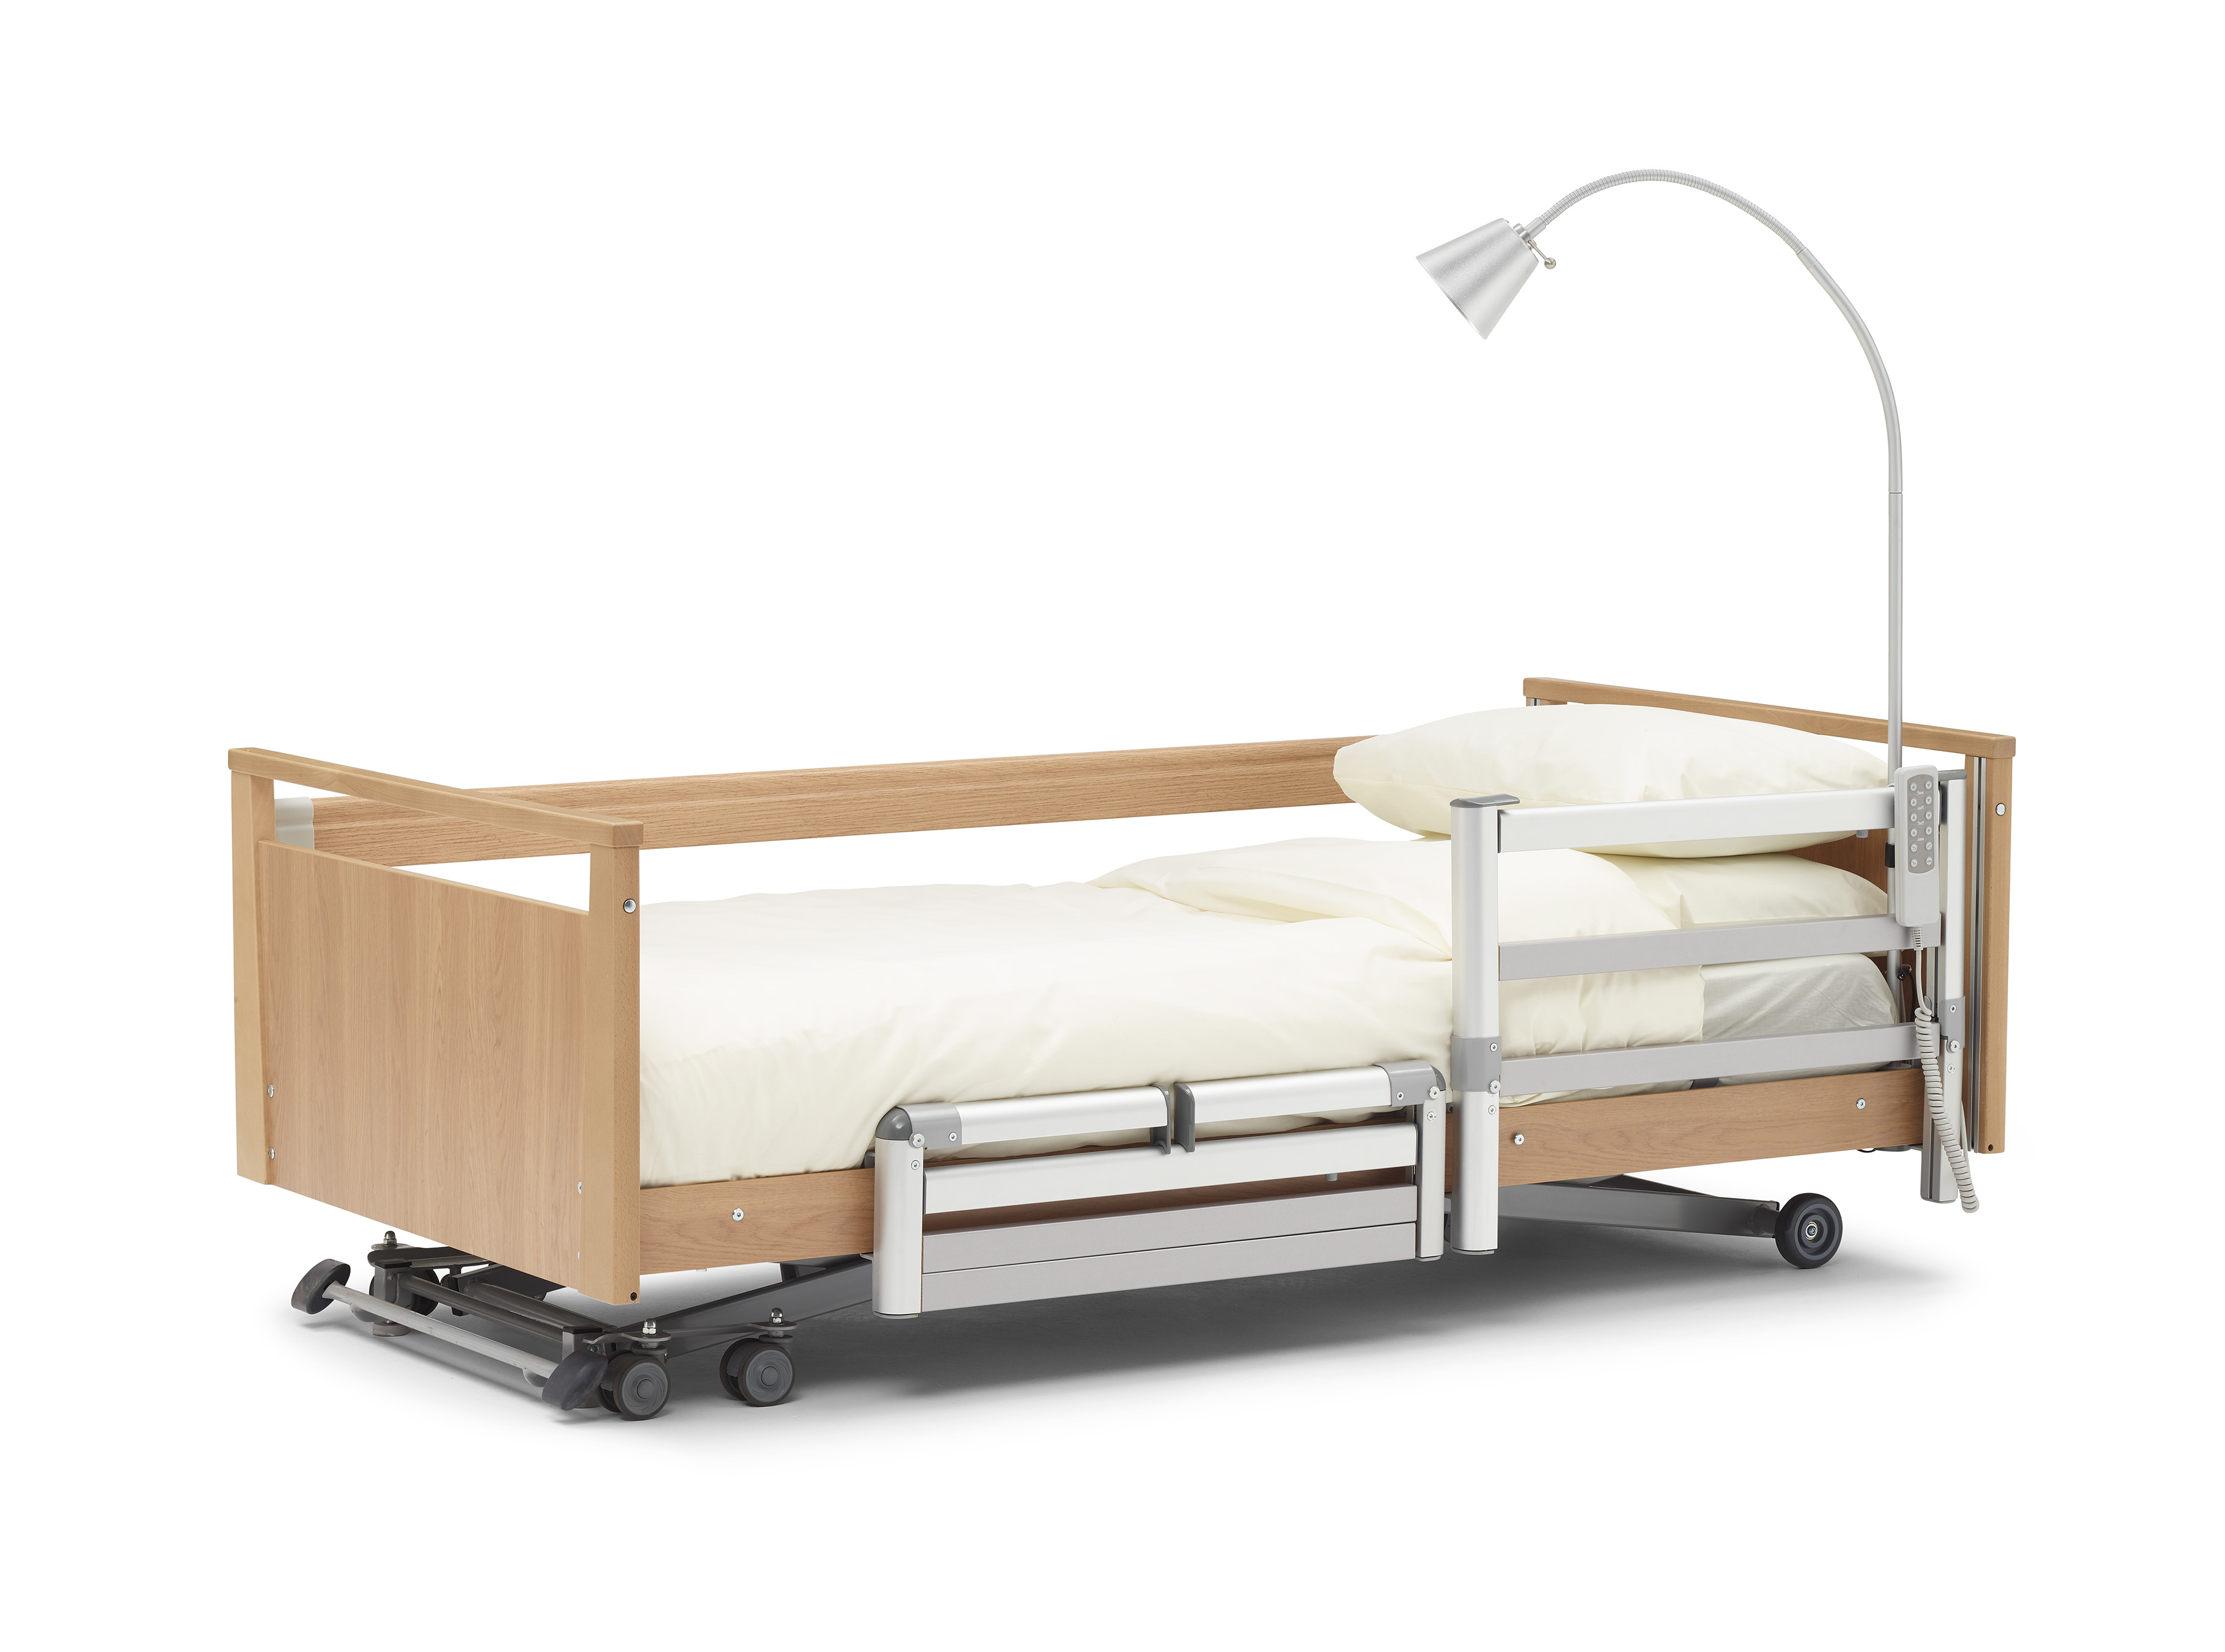 Impress 3 bed c/w Contemporary head/foot boards, side skirts, 2 x aluminium split side rails and 2 x side rails
Finish: Light Sorano Oak